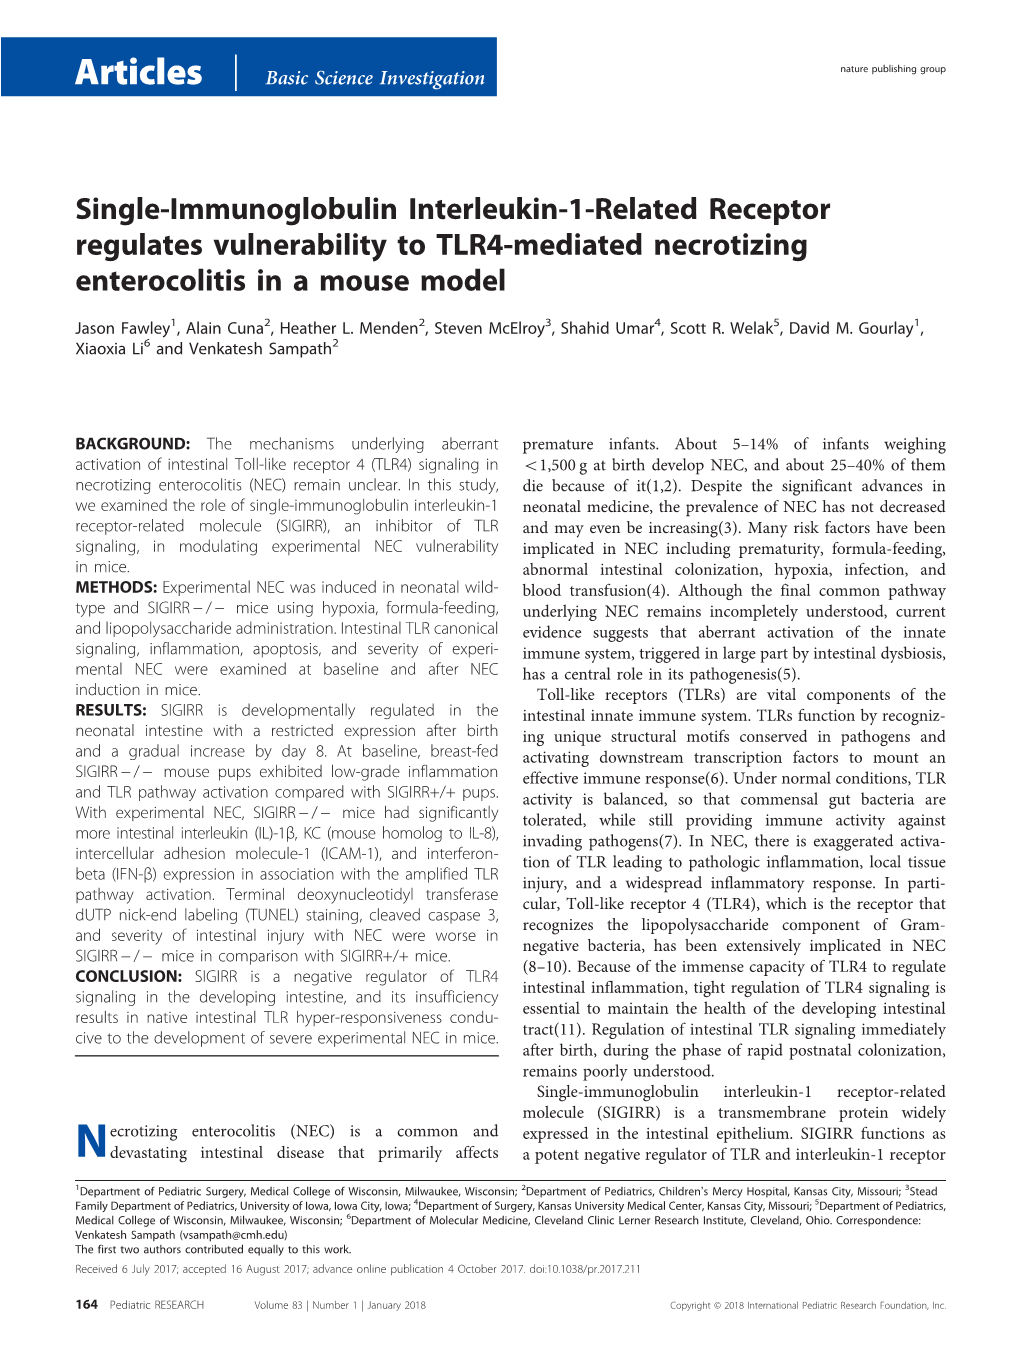 Single-Immunoglobulin Interleukin-1-Related Receptor Regulates Vulnerability to TLR4-Mediated Necrotizing Enterocolitis in a Mouse Model